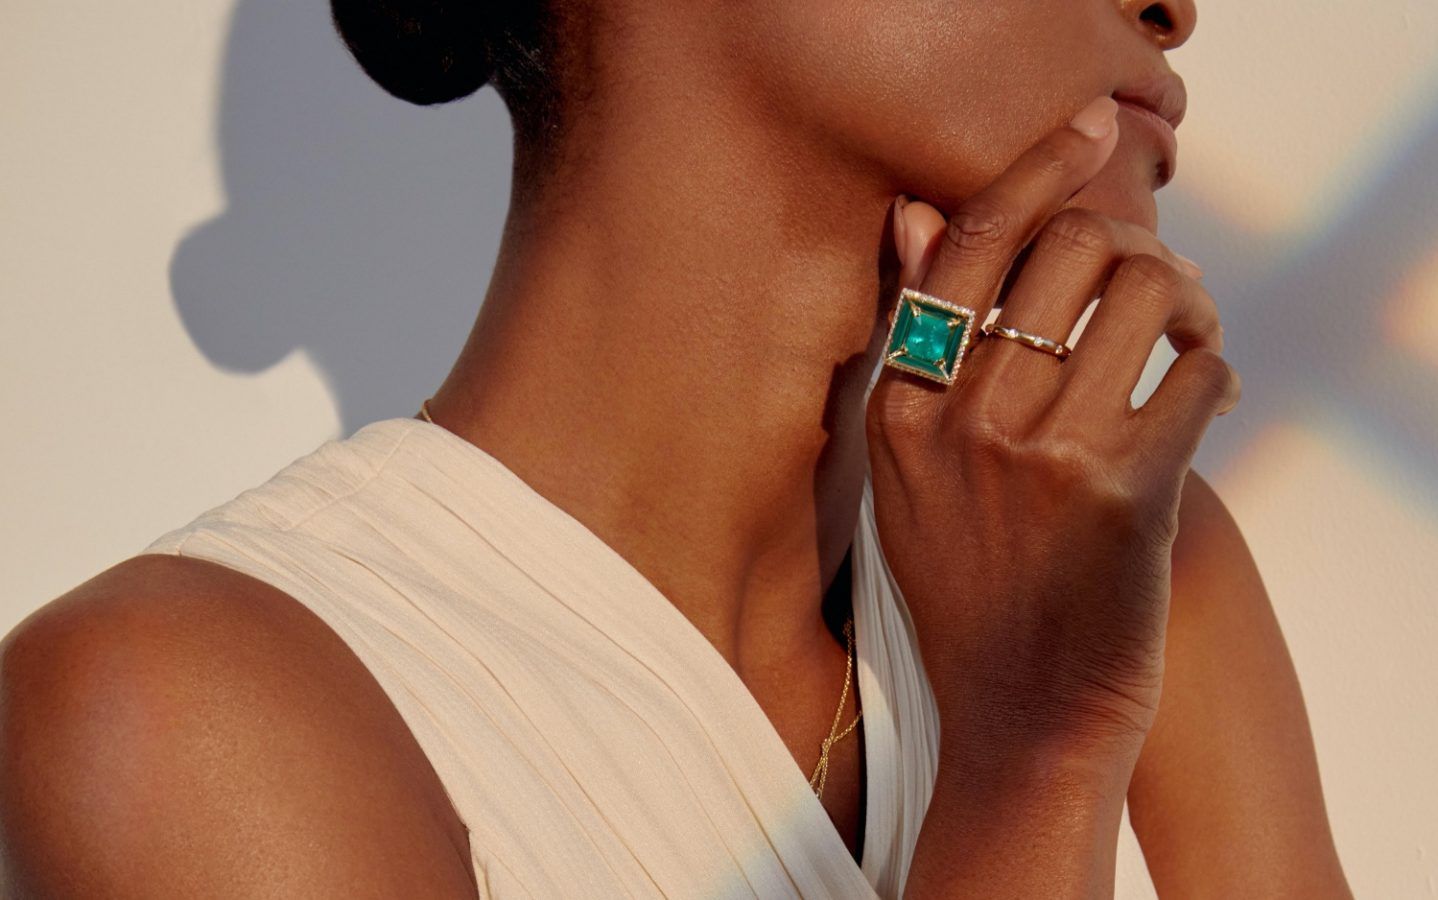 Luxury Brand KHIRY Introduces Fine Jewelry Line